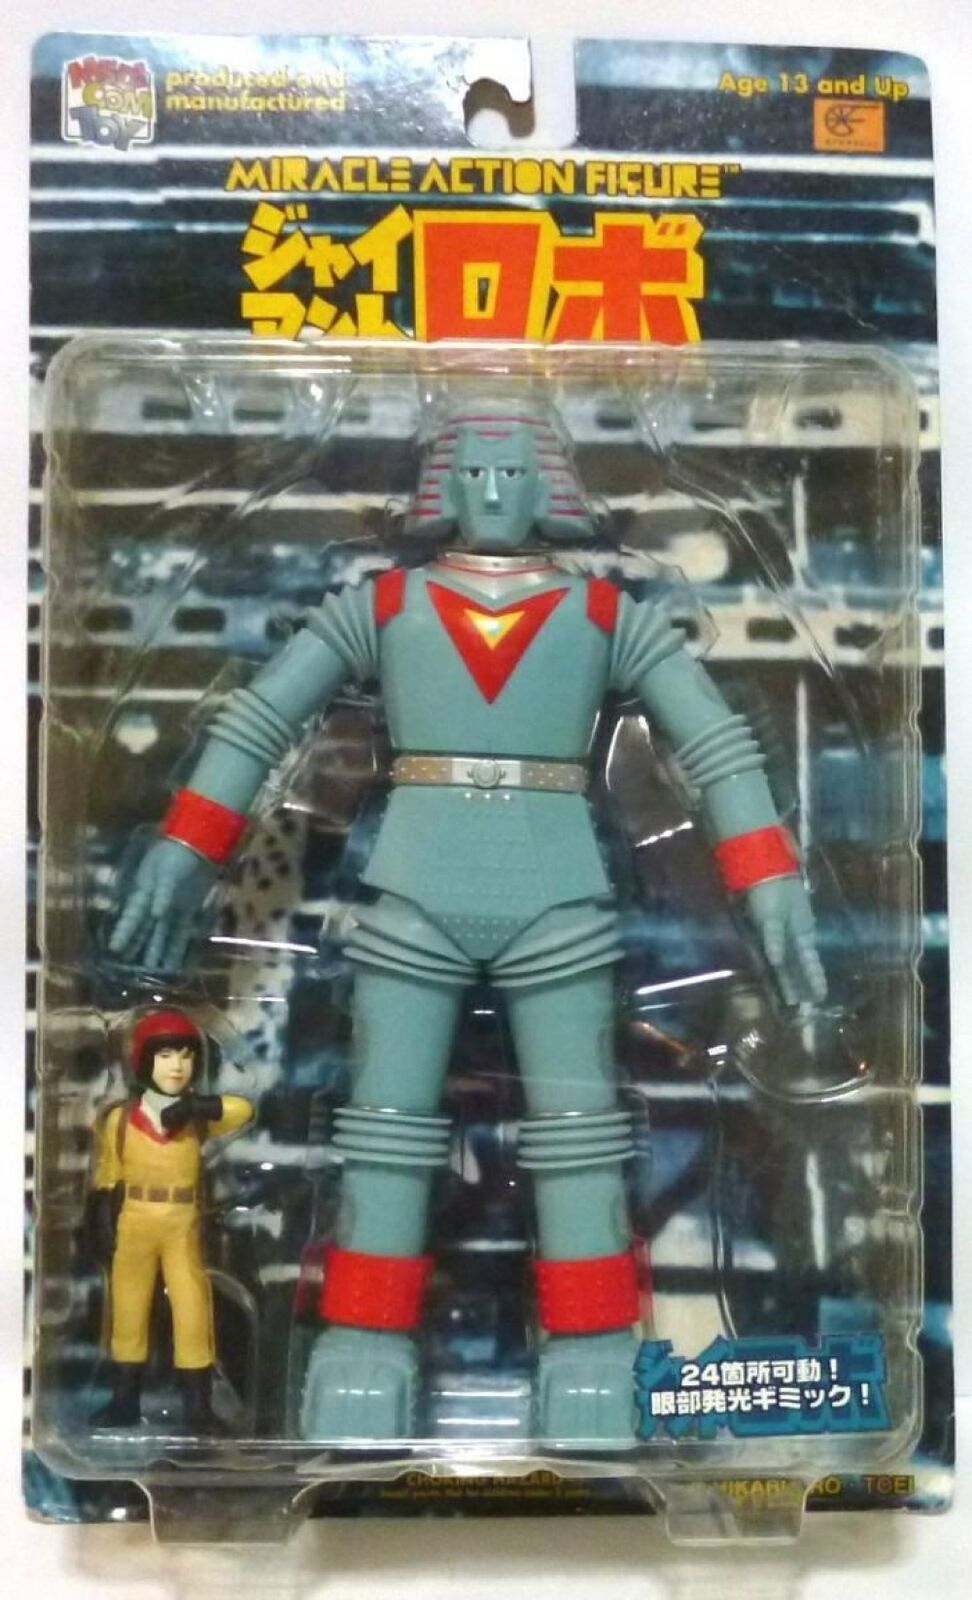 UNOPENED Medicom Toy Giant Robo Miracle Action Figure Retro Daisaku Shonen